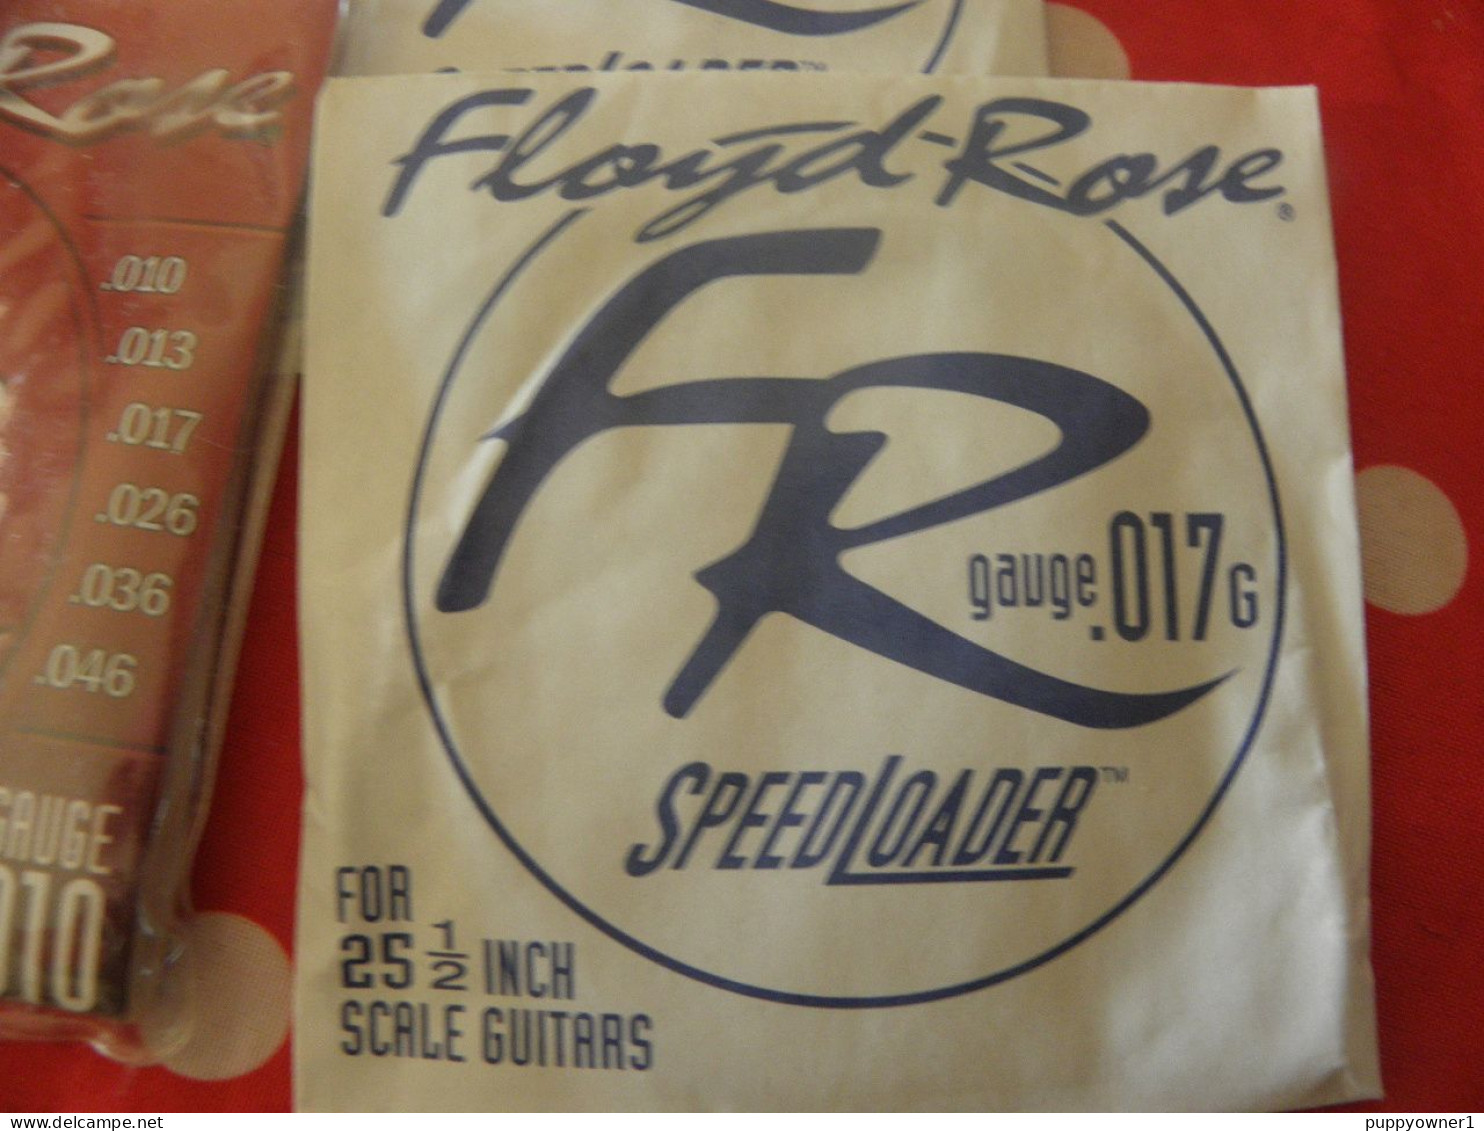 Rare 3 Floyd Rose Speedloader Pour 25.5 Inch Scale Guitar Corde De Guitare 0.017g - Instruments De Musique